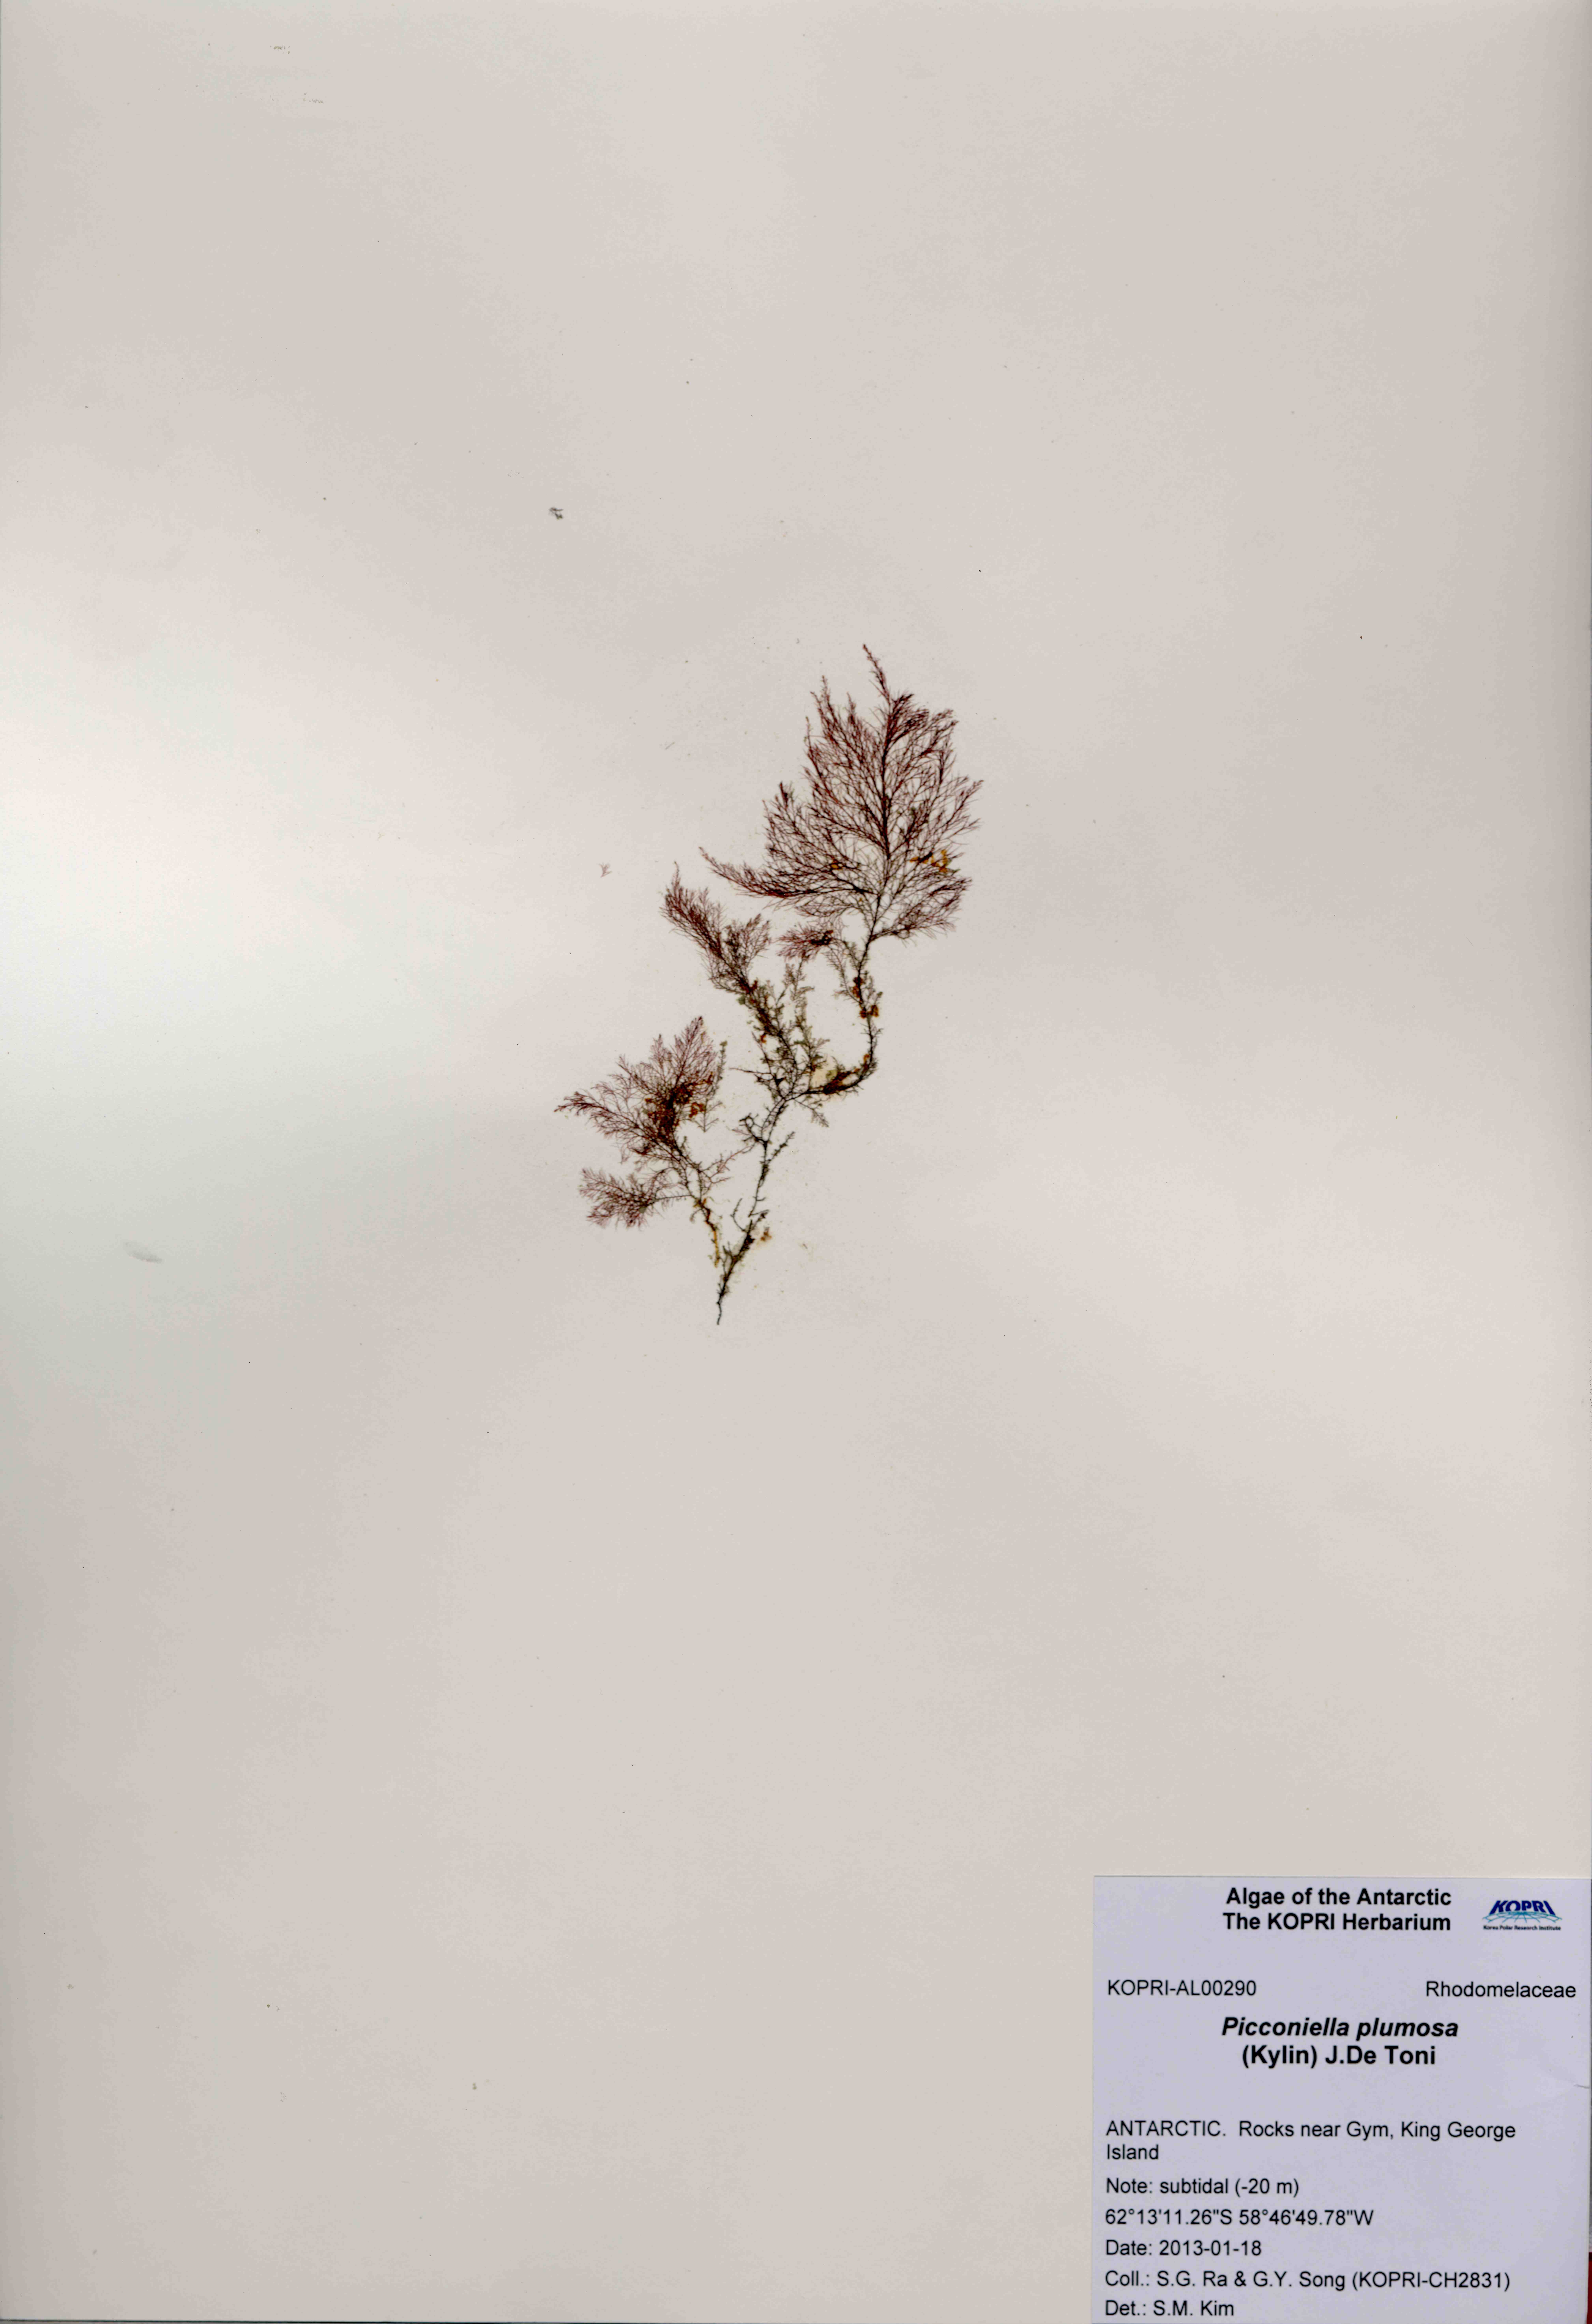 Picconiella plumosa (Kylin) J.De Toni